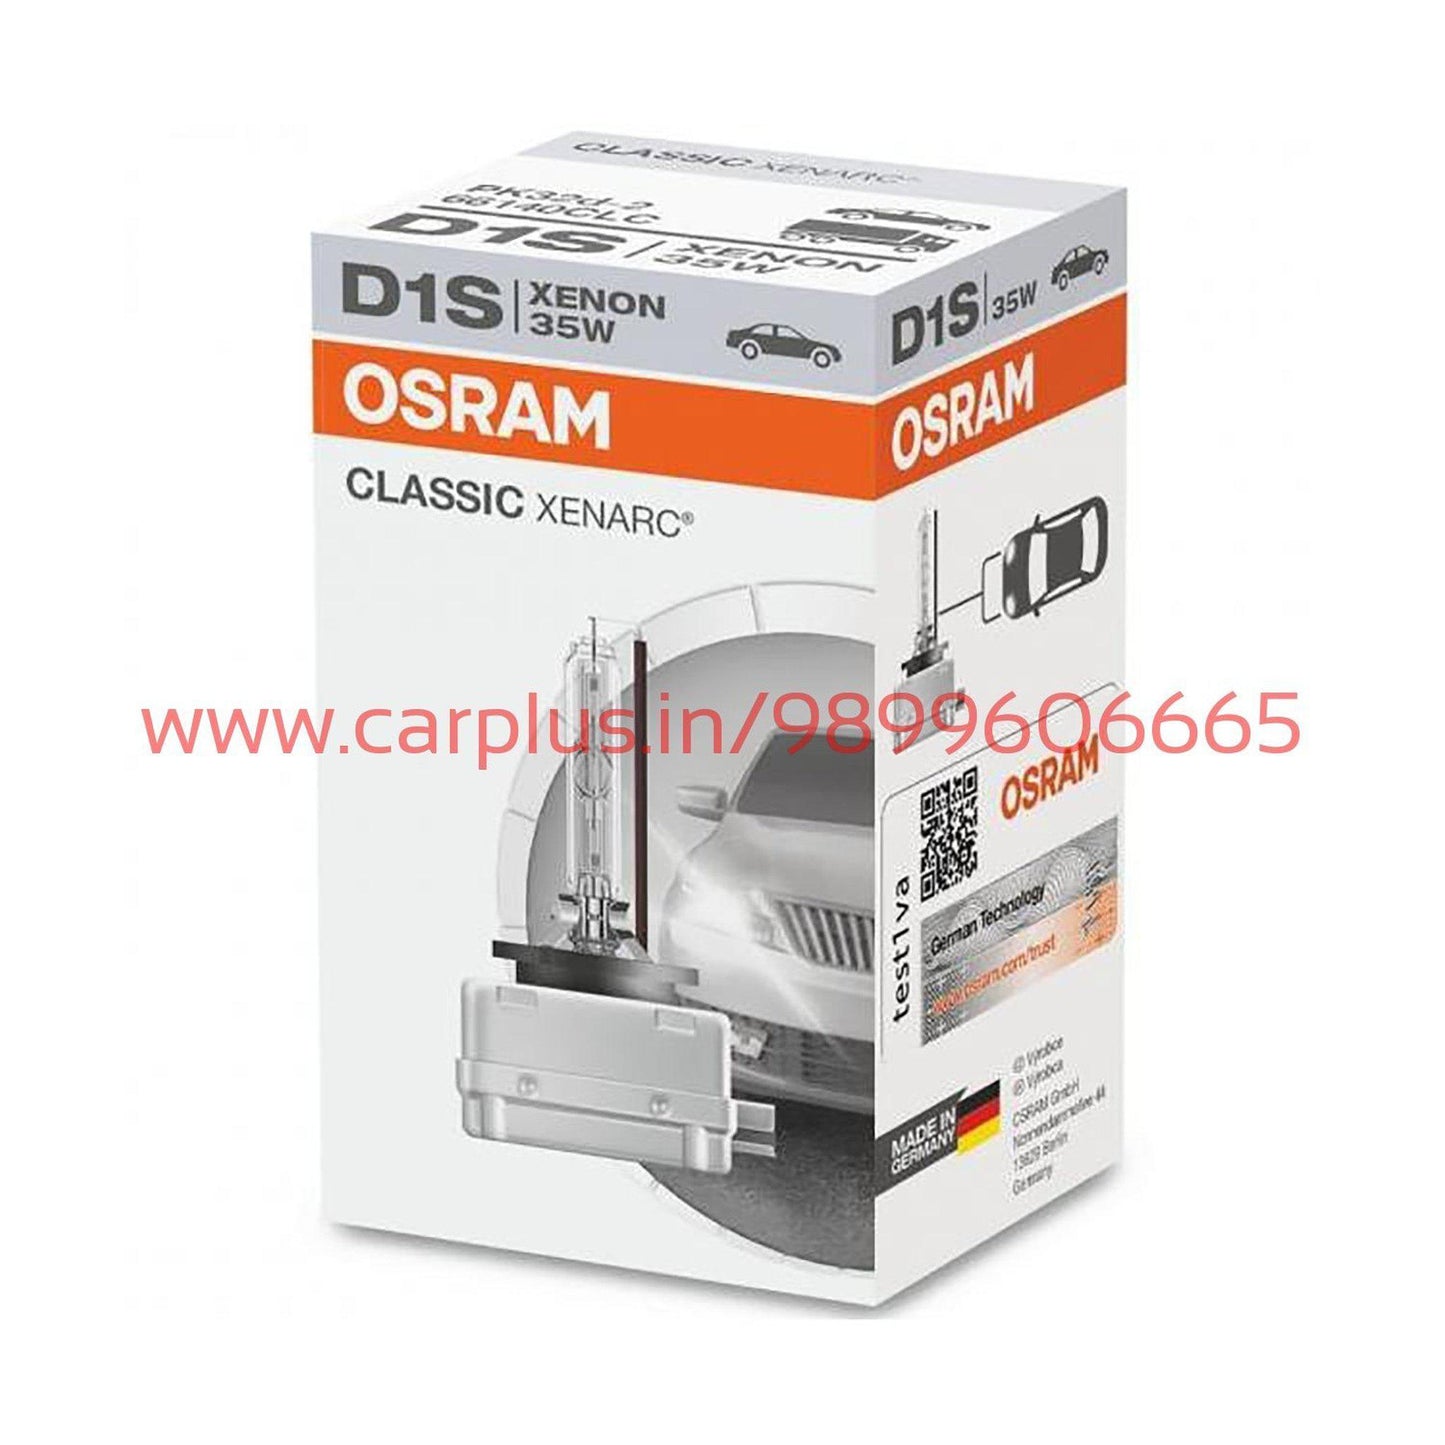 OSRAM D1S Xenon HID Bulb 6000k, Car Accessories, Electronics